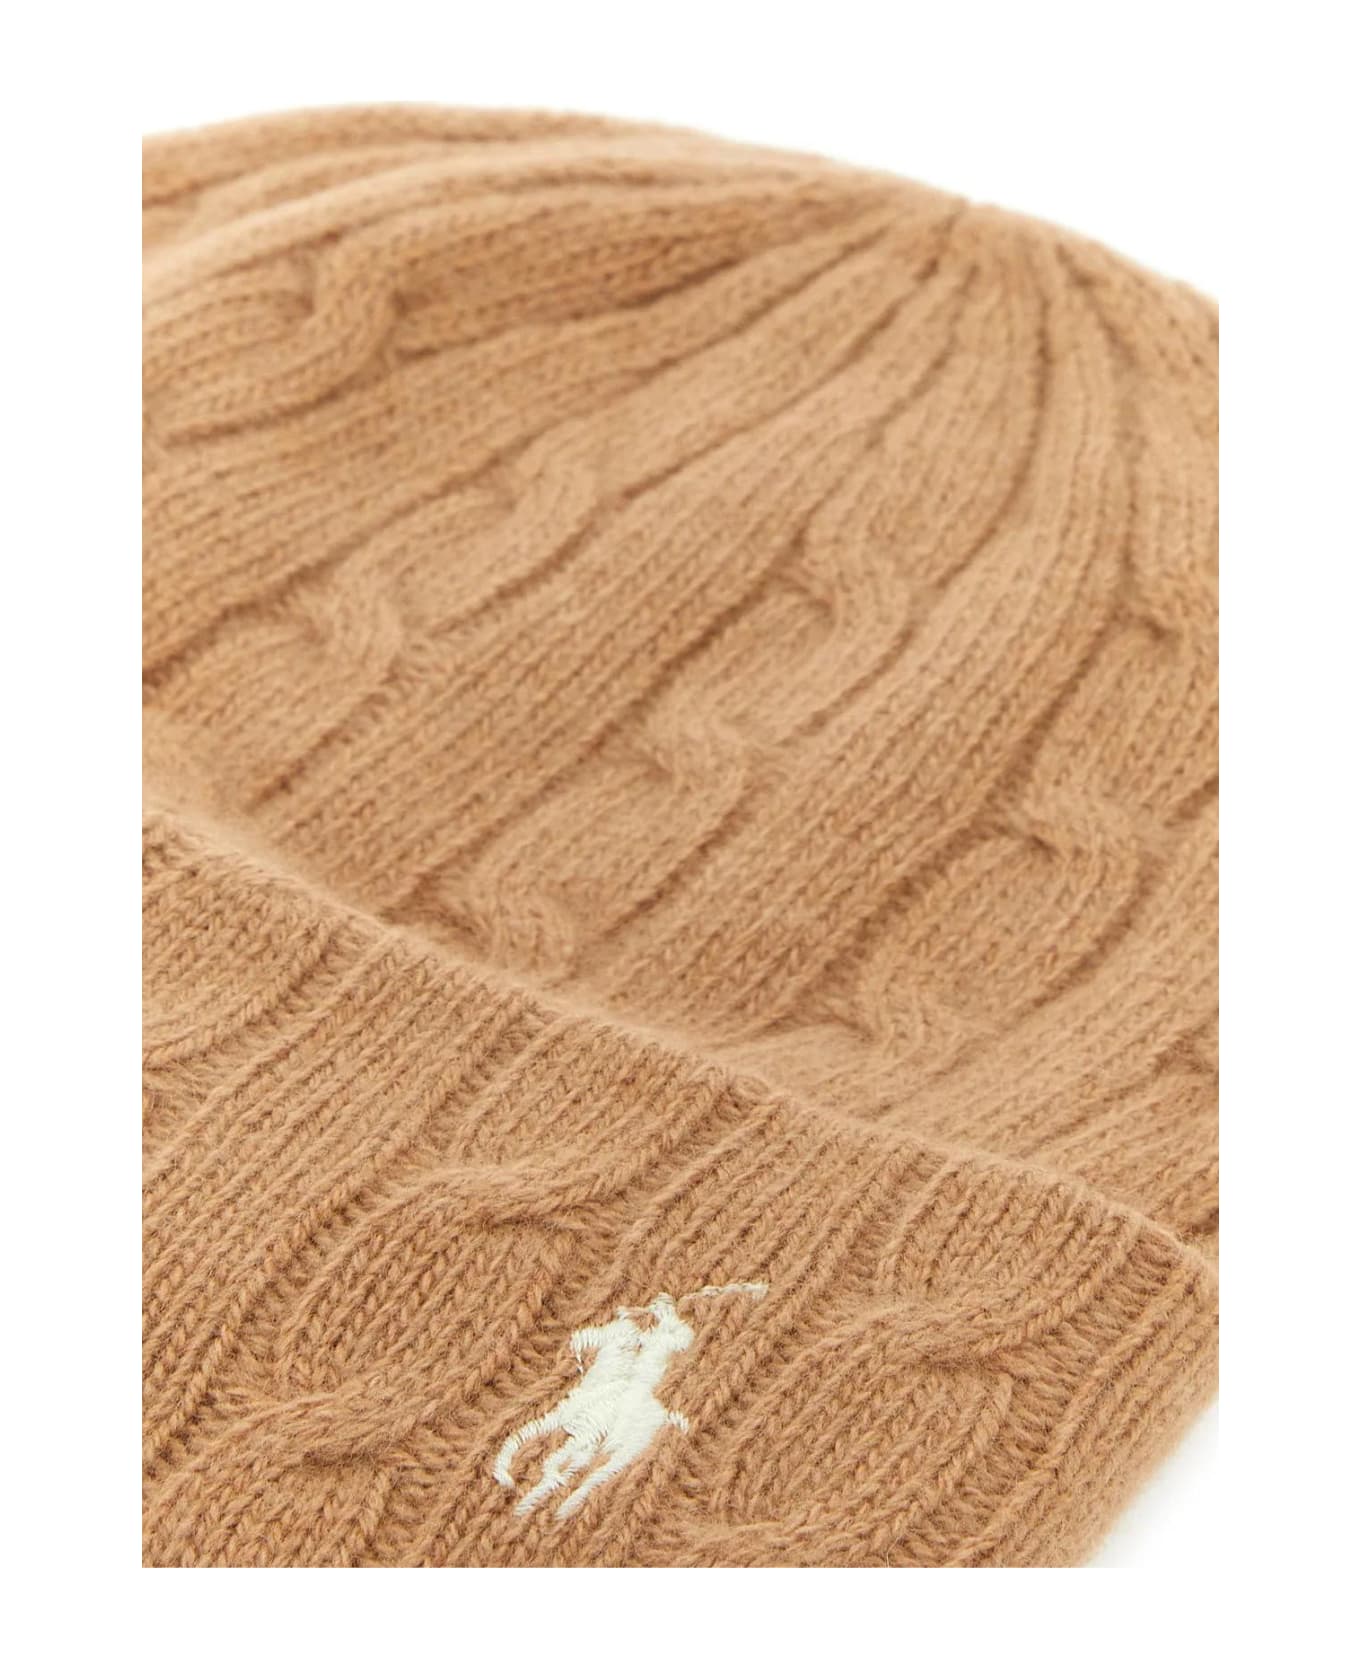 Polo Ralph Lauren Camel Wool Blend Beanie Hat - BEIGE